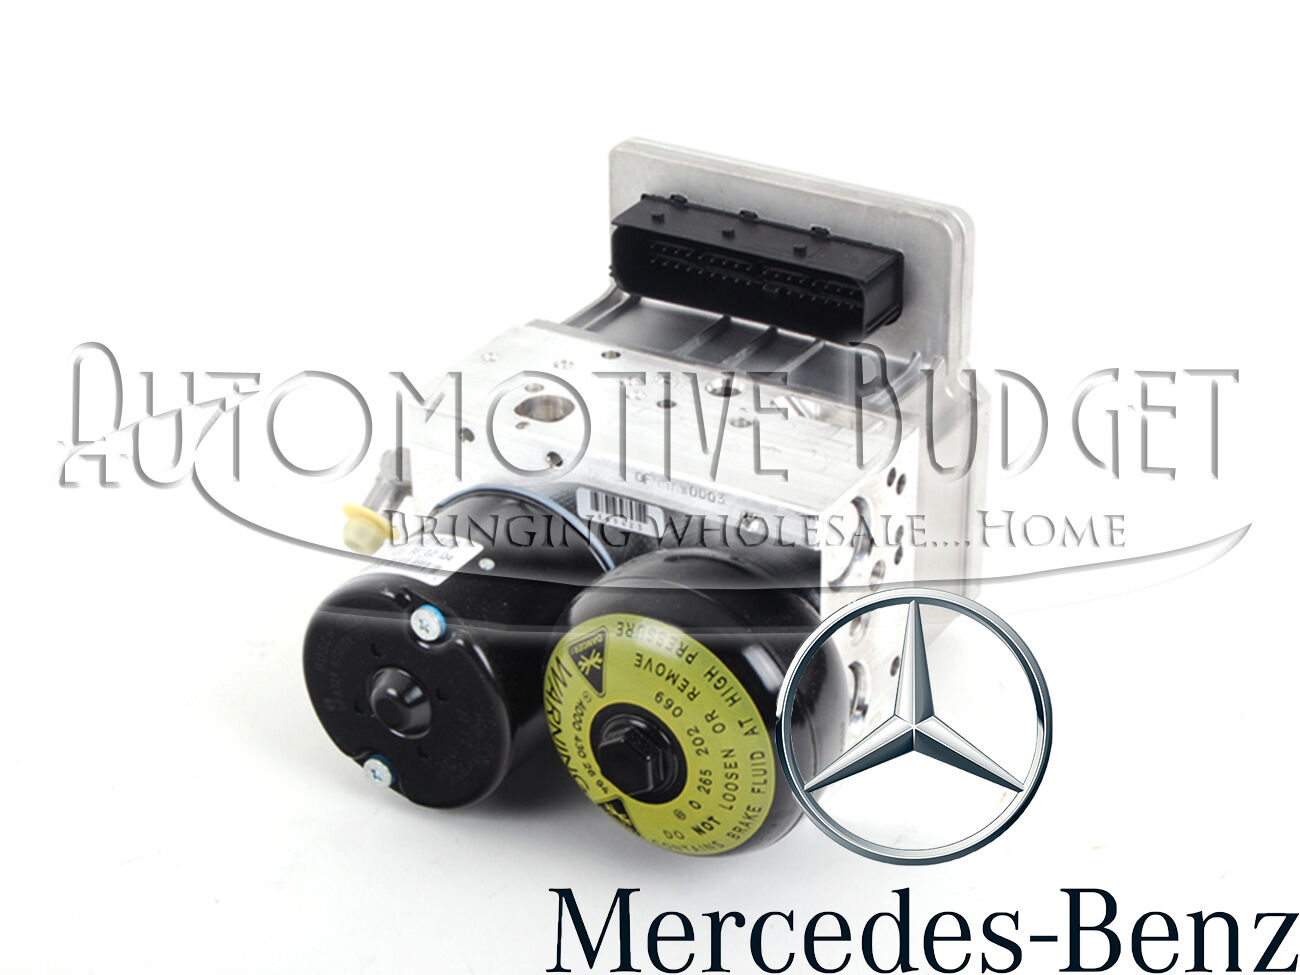 ABS Hydro Pump for Mercedes Benz E320 E500 E55 AMG - OEM REMAN